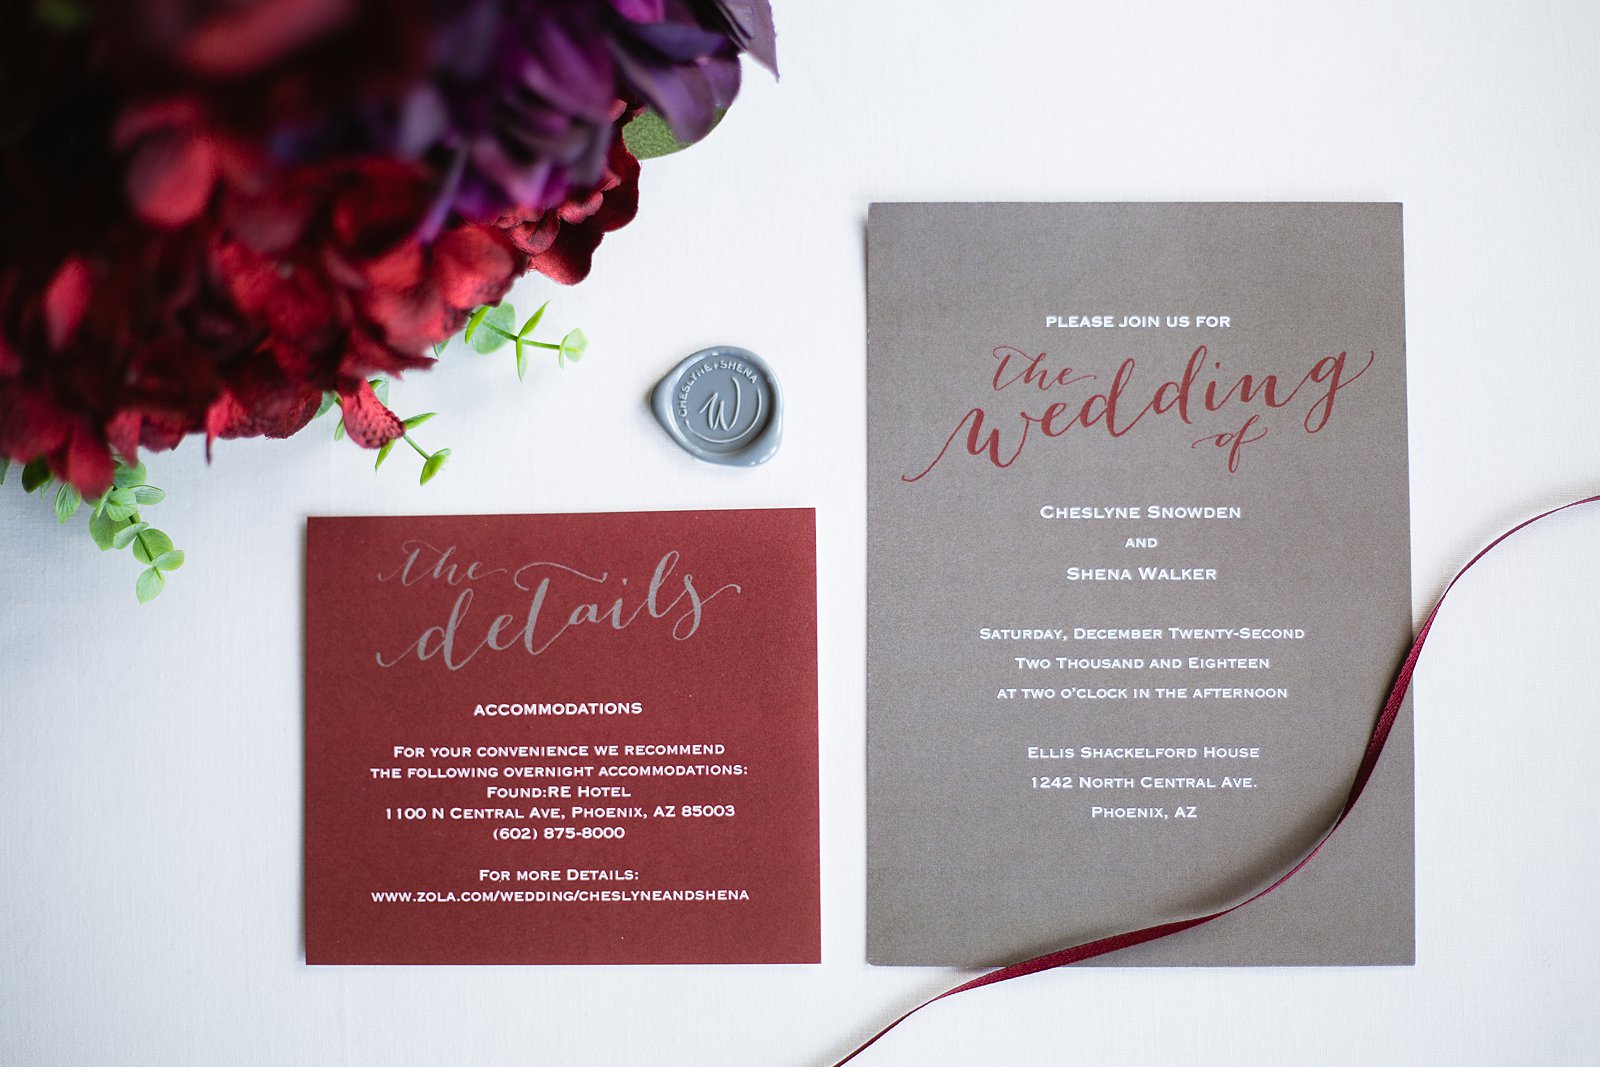 Grey and burgundy wedding invitations by PMA Photography.